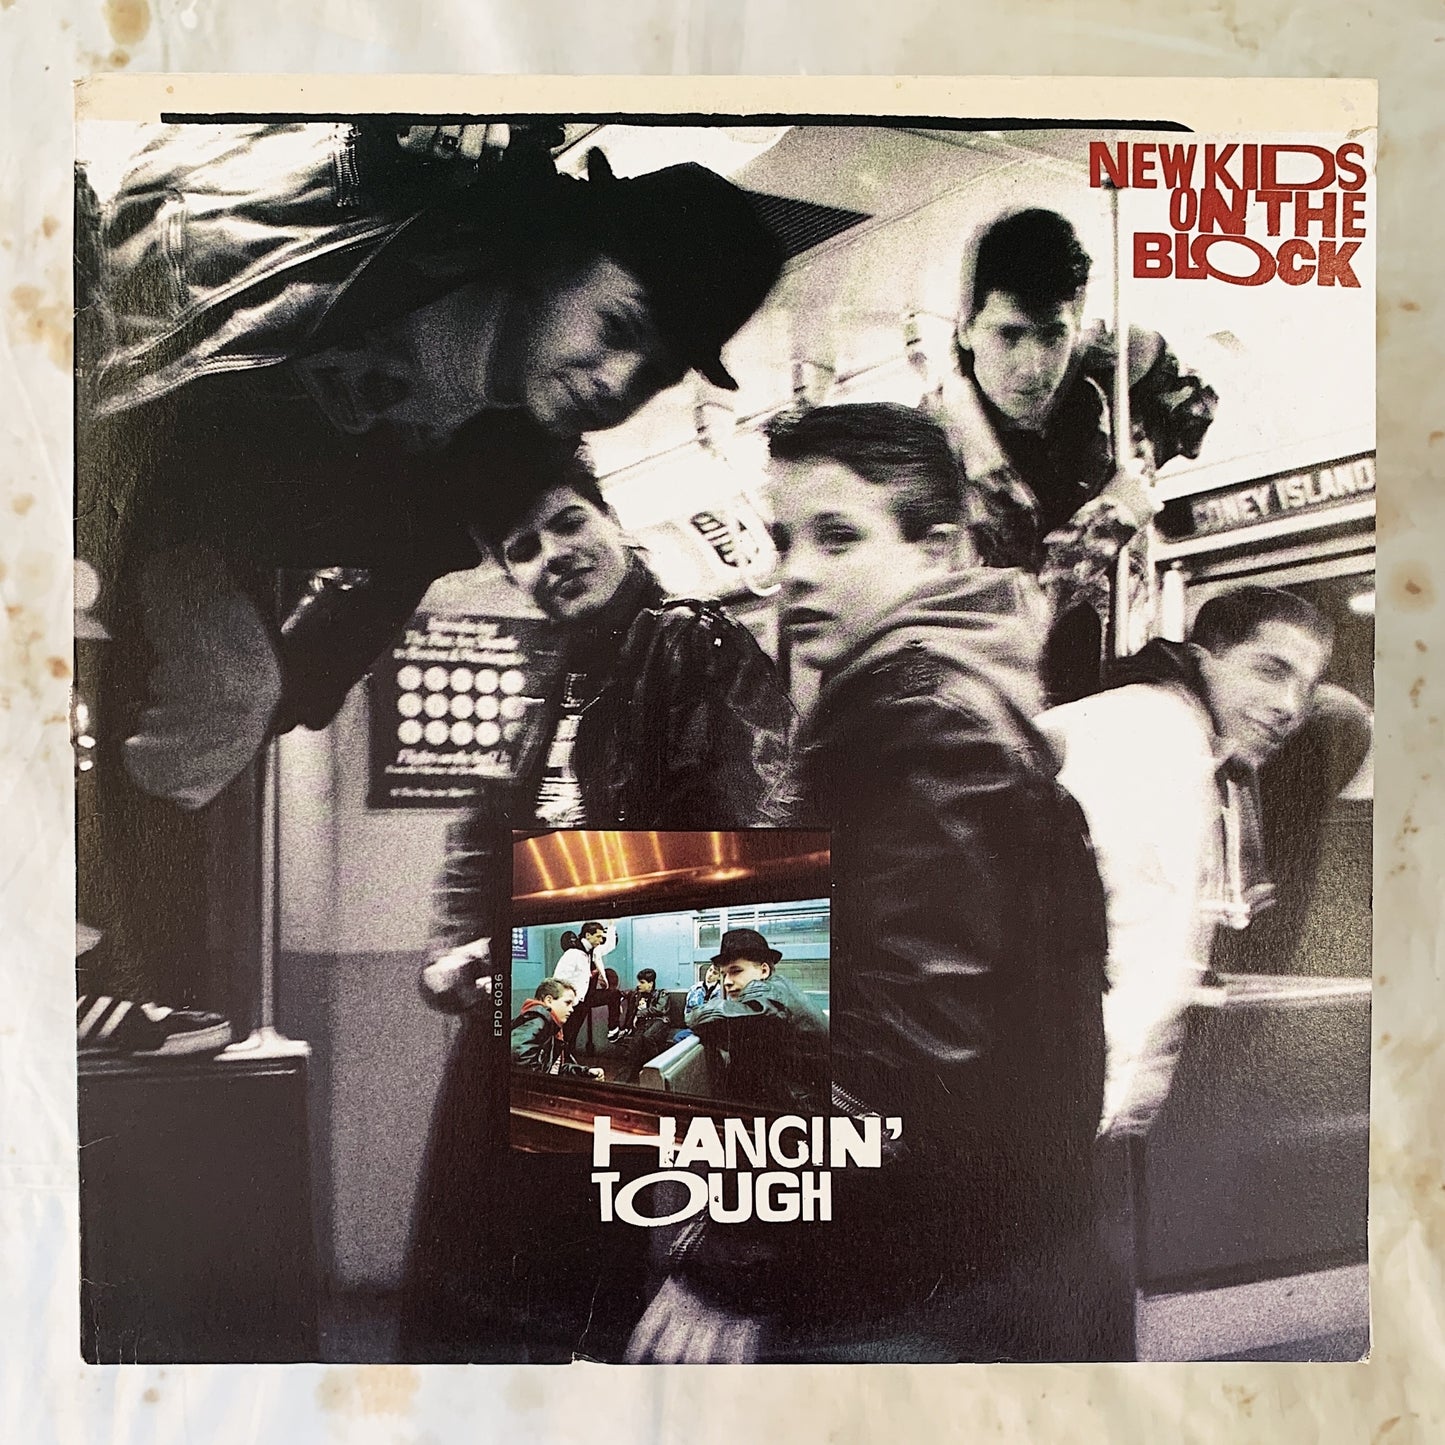 New Kids On The Block / Hangin' Tough LP